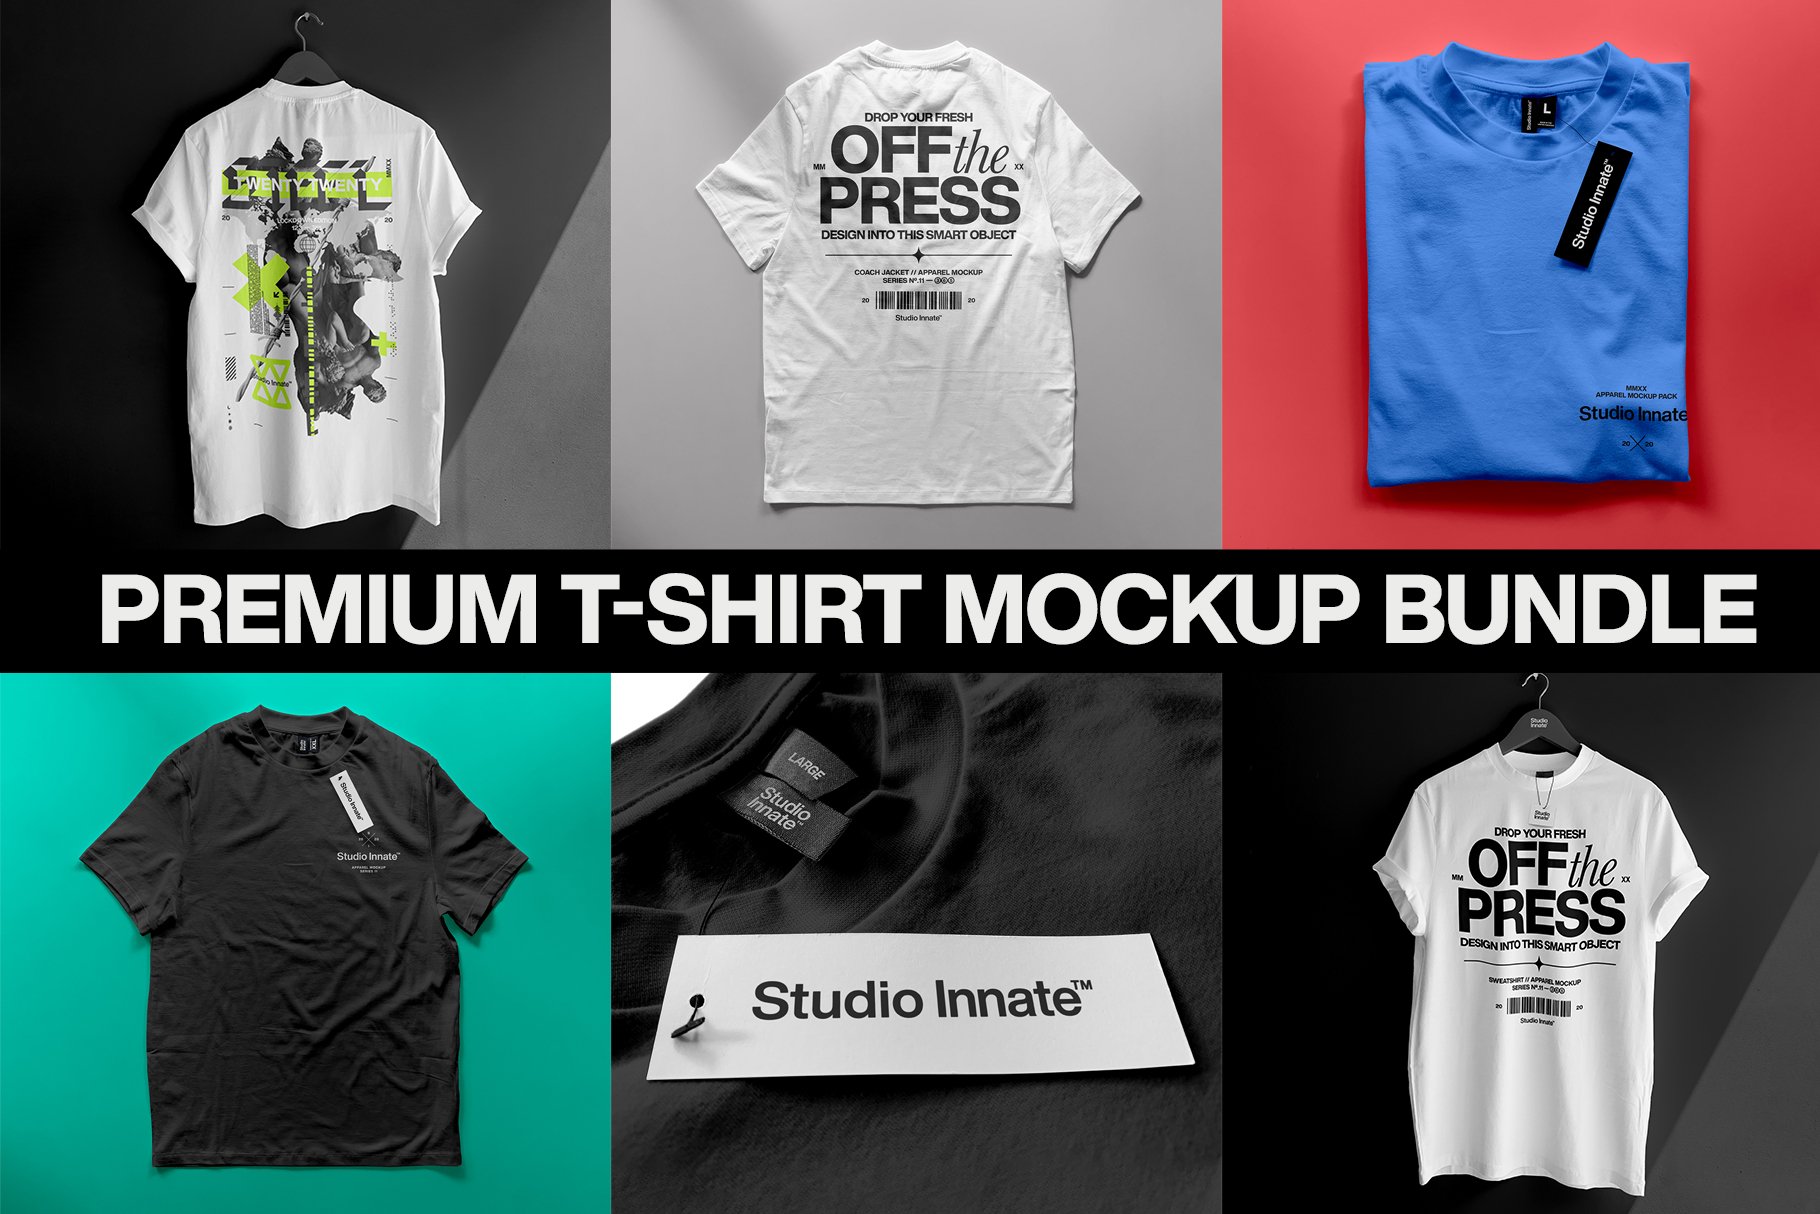 Men Soccer Jersey kit Mockup – MasterBundles